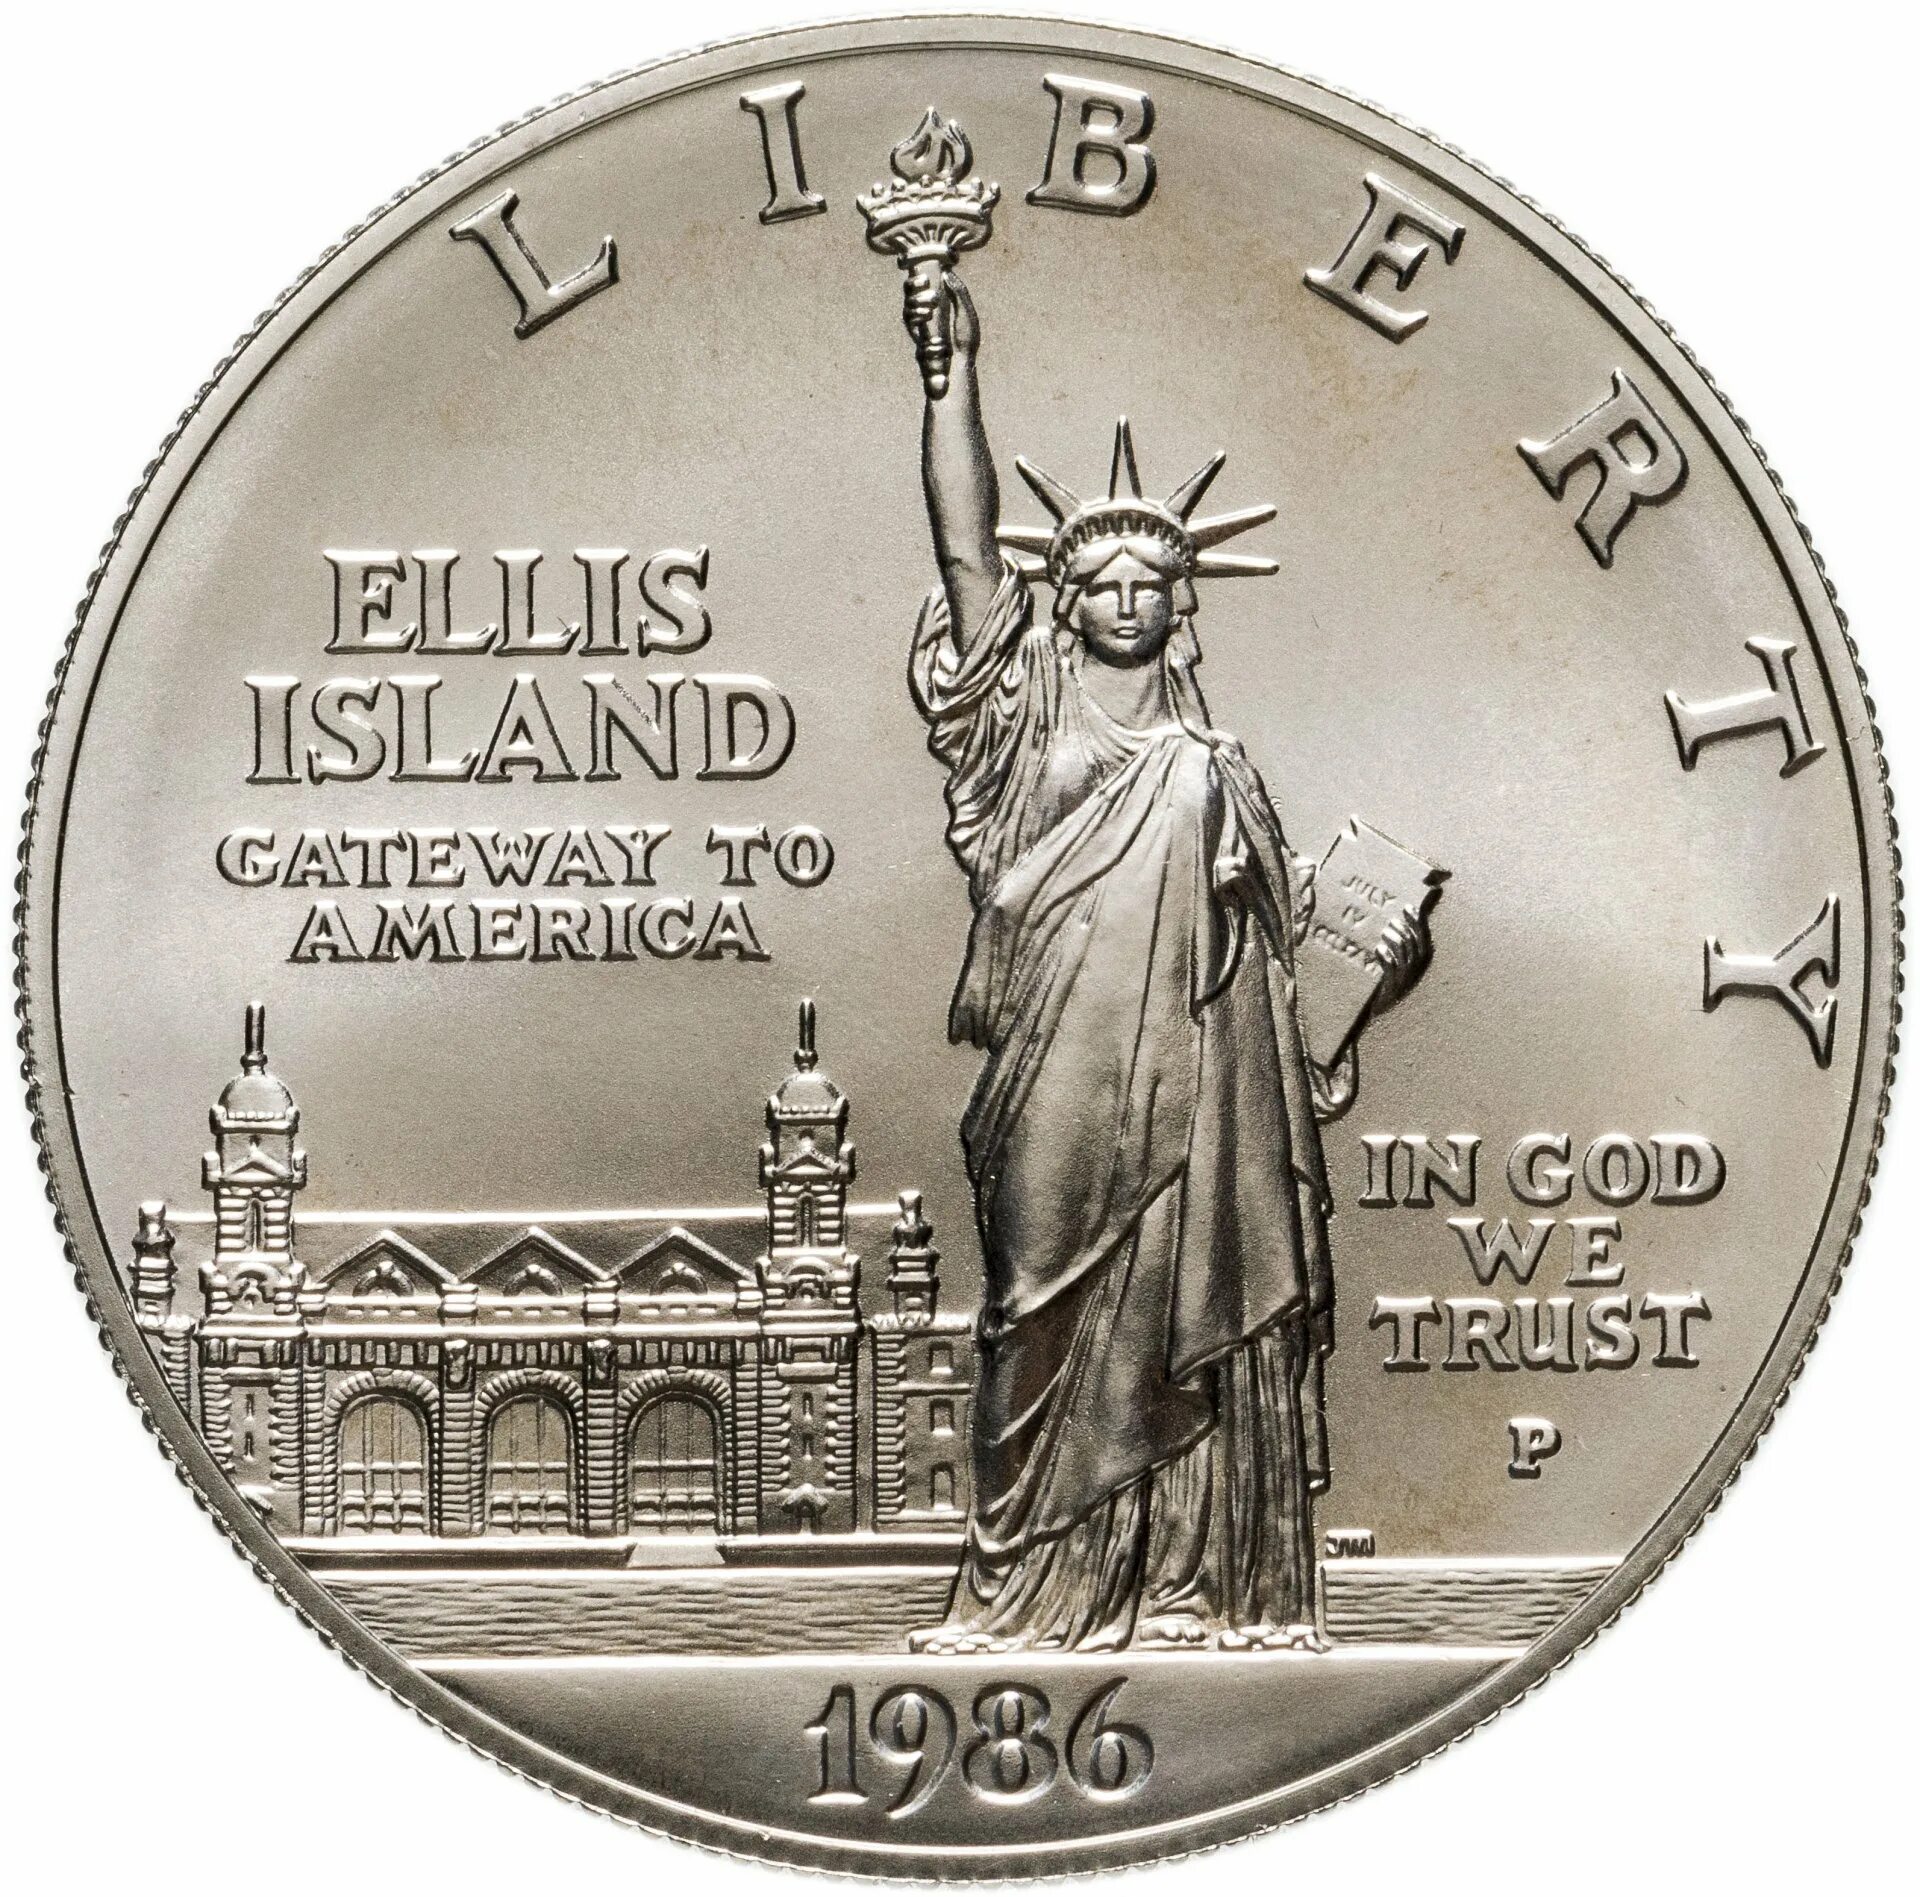 США, серебряная монета 1 доллар, 100 лет статуе свободы, 1986 года. США 1 доллар 1986 статуя. 1 Доллар Ellis Island 1986 год. 1 Доллар 1986 США монета. 1 вопрос 1 доллар